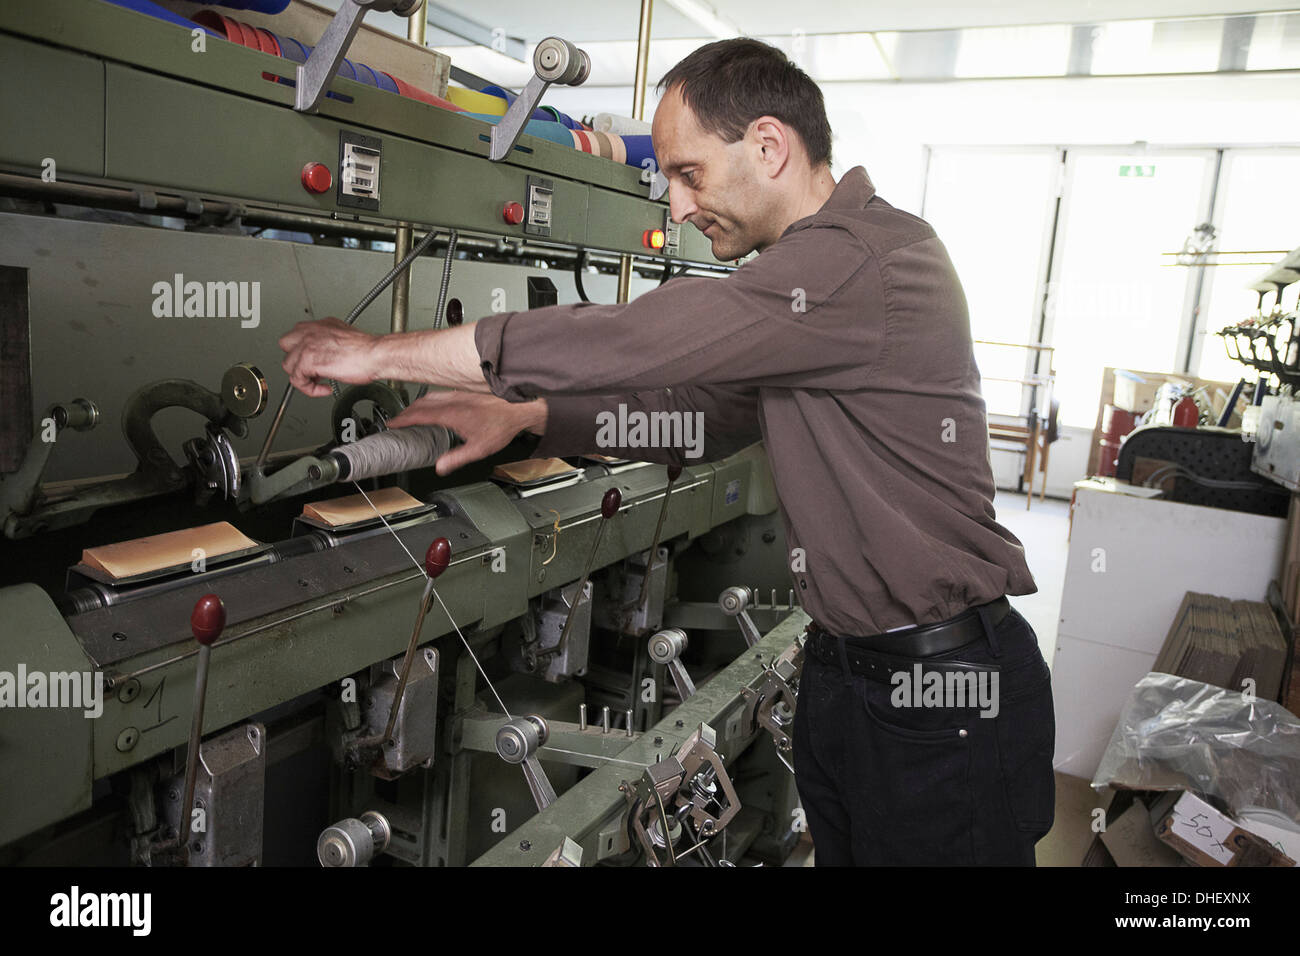 Worker using machine in wool factory Stock Photo